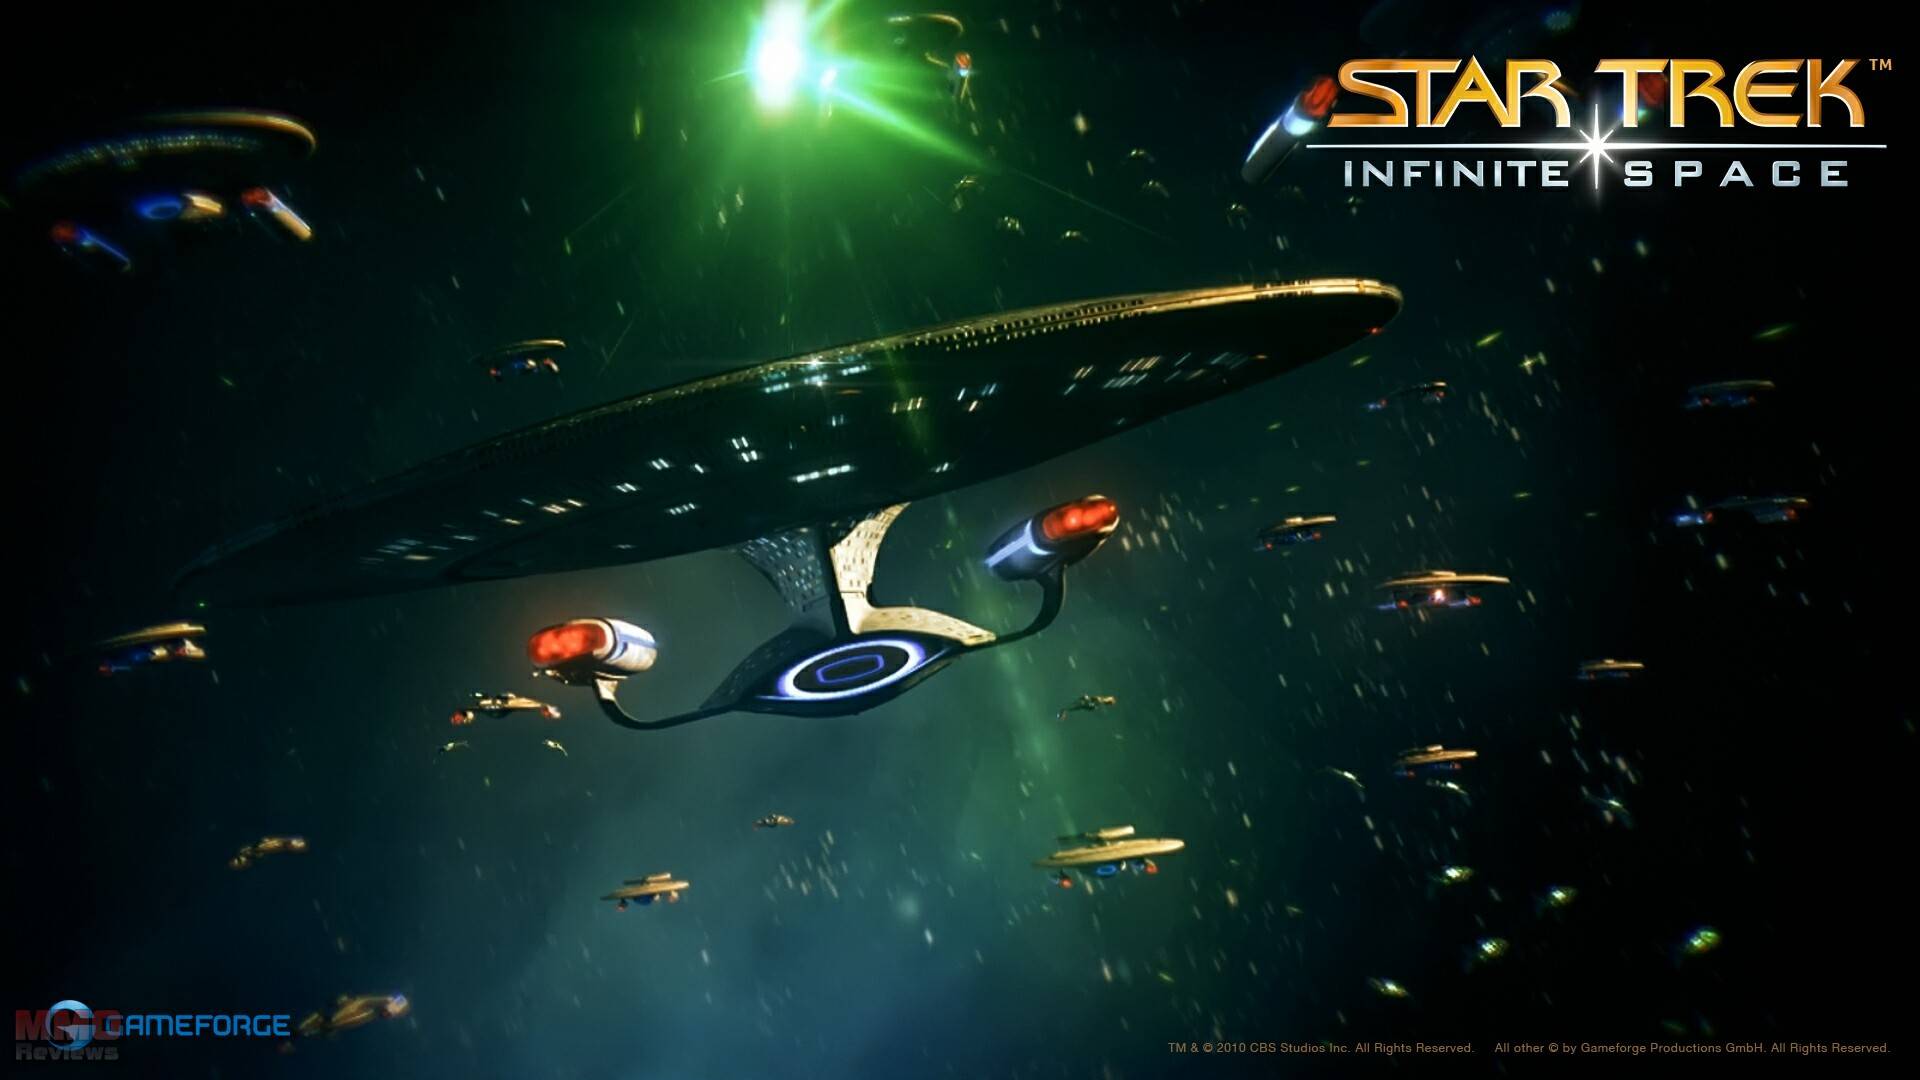 New Full HD Wallpaper Of Star Trek Infinite Space